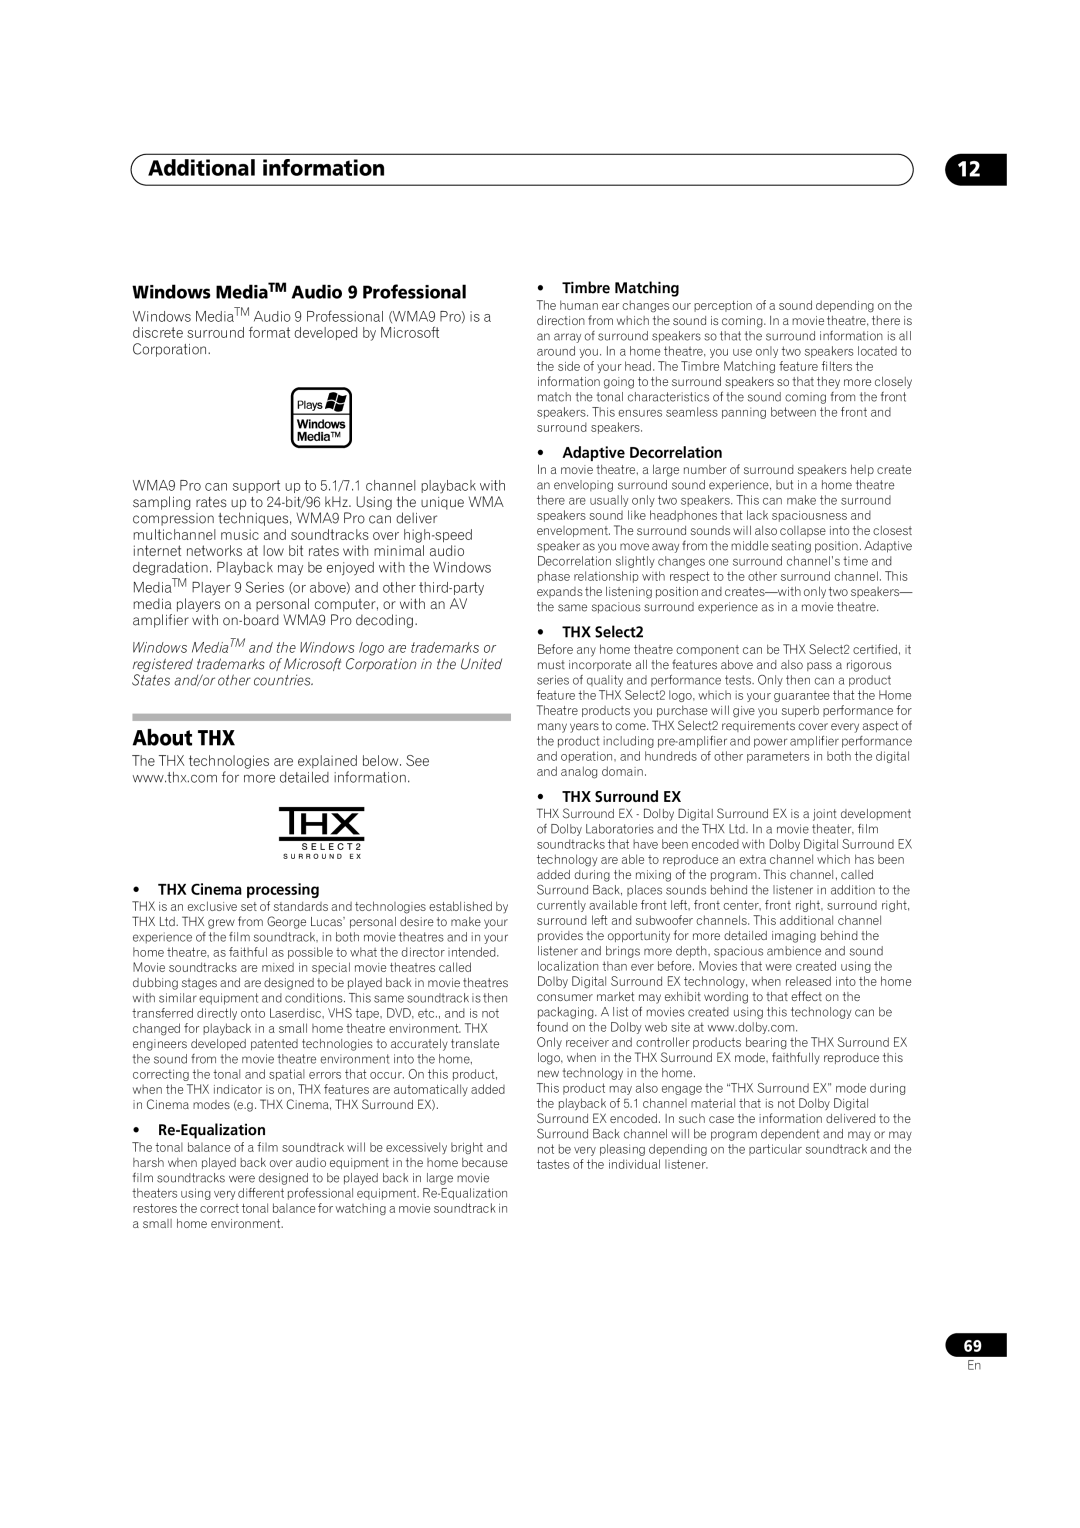 Pioneer VSX1017TXV manual About THX, Windows MediaTM Audio 9 Professional, Additional information 